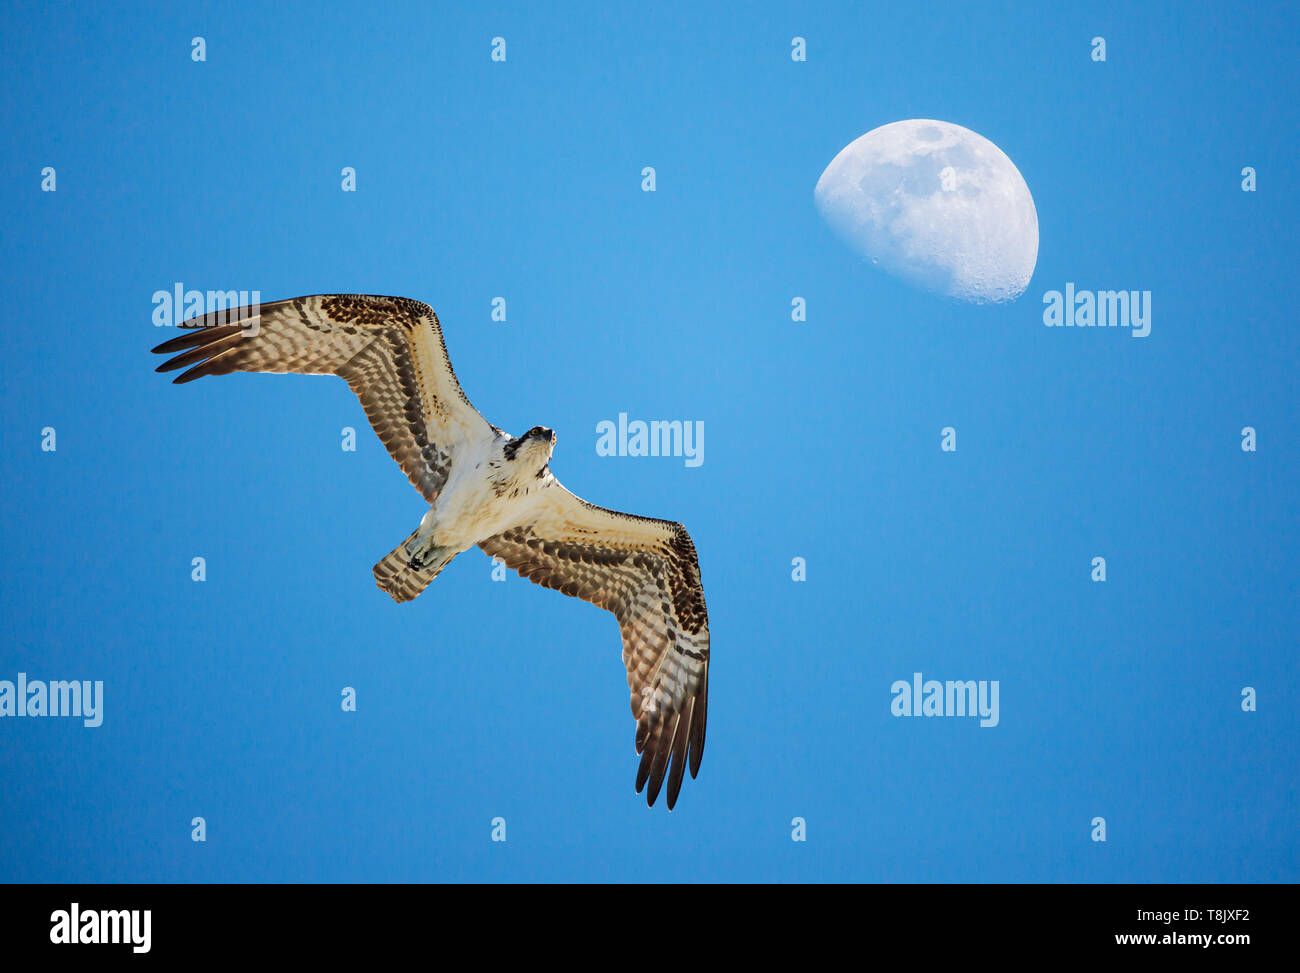 Un osprey svetta in un luminoso cielo blu con un waxing gibbous moon overhead. Foto Stock